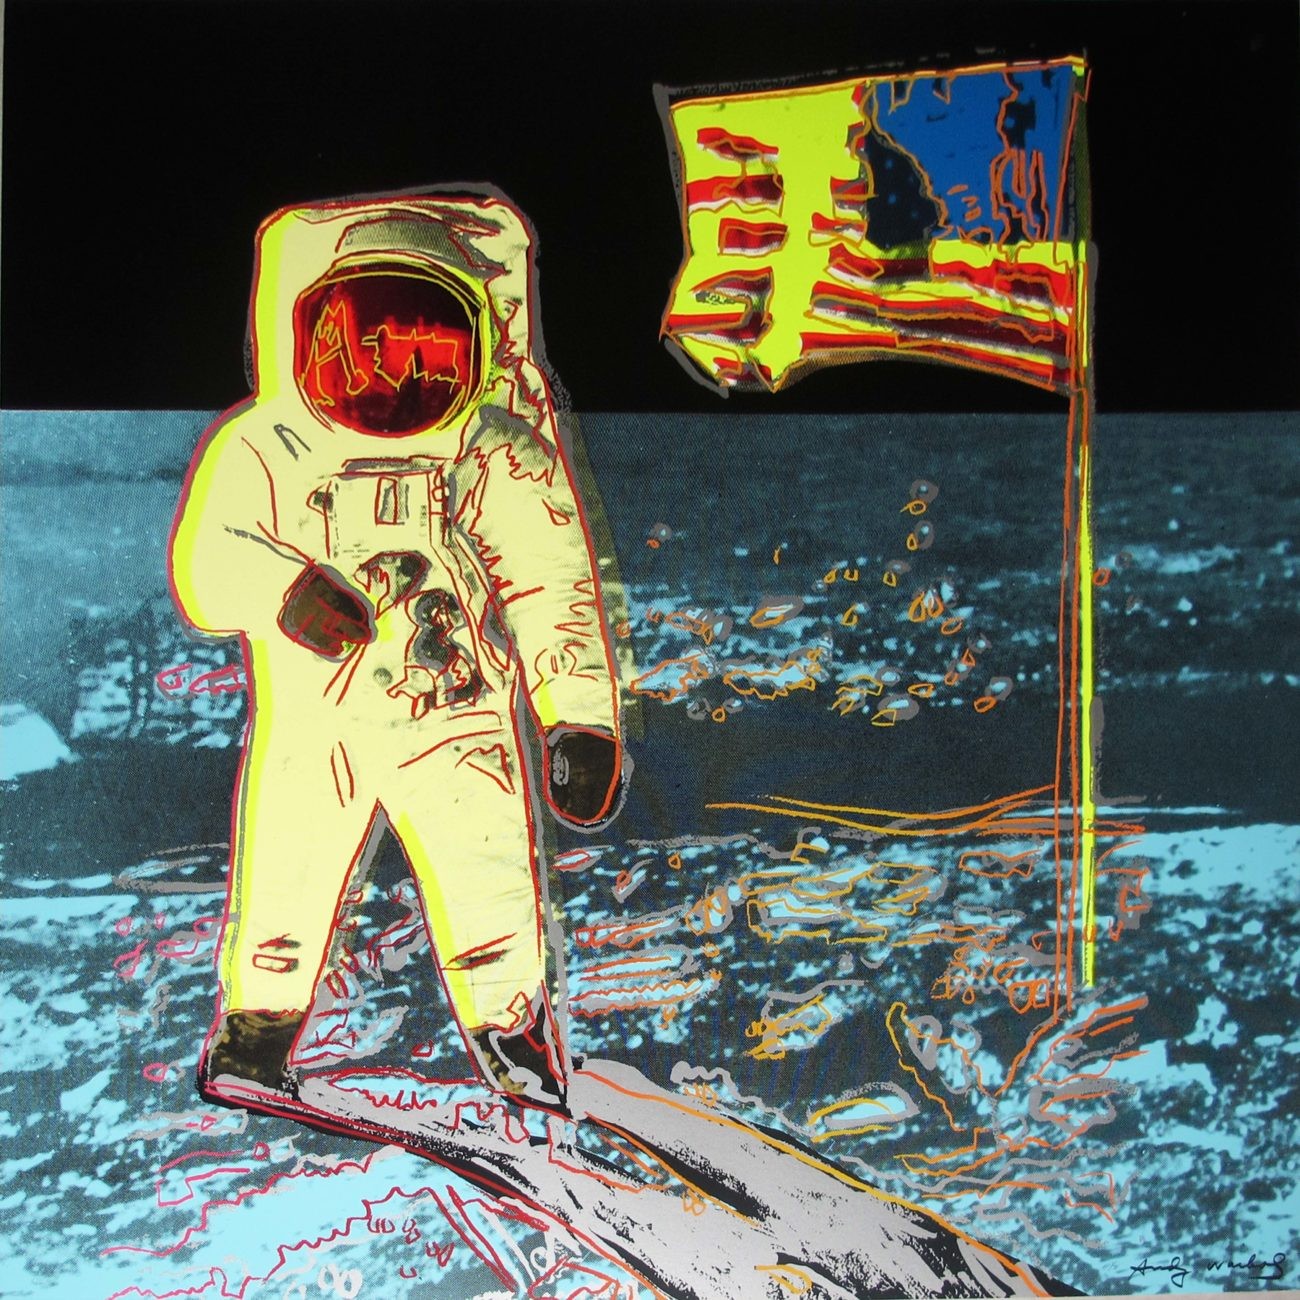 Andy Warhol | Moonwalk 404 | 1987 | Image of Artists' work.